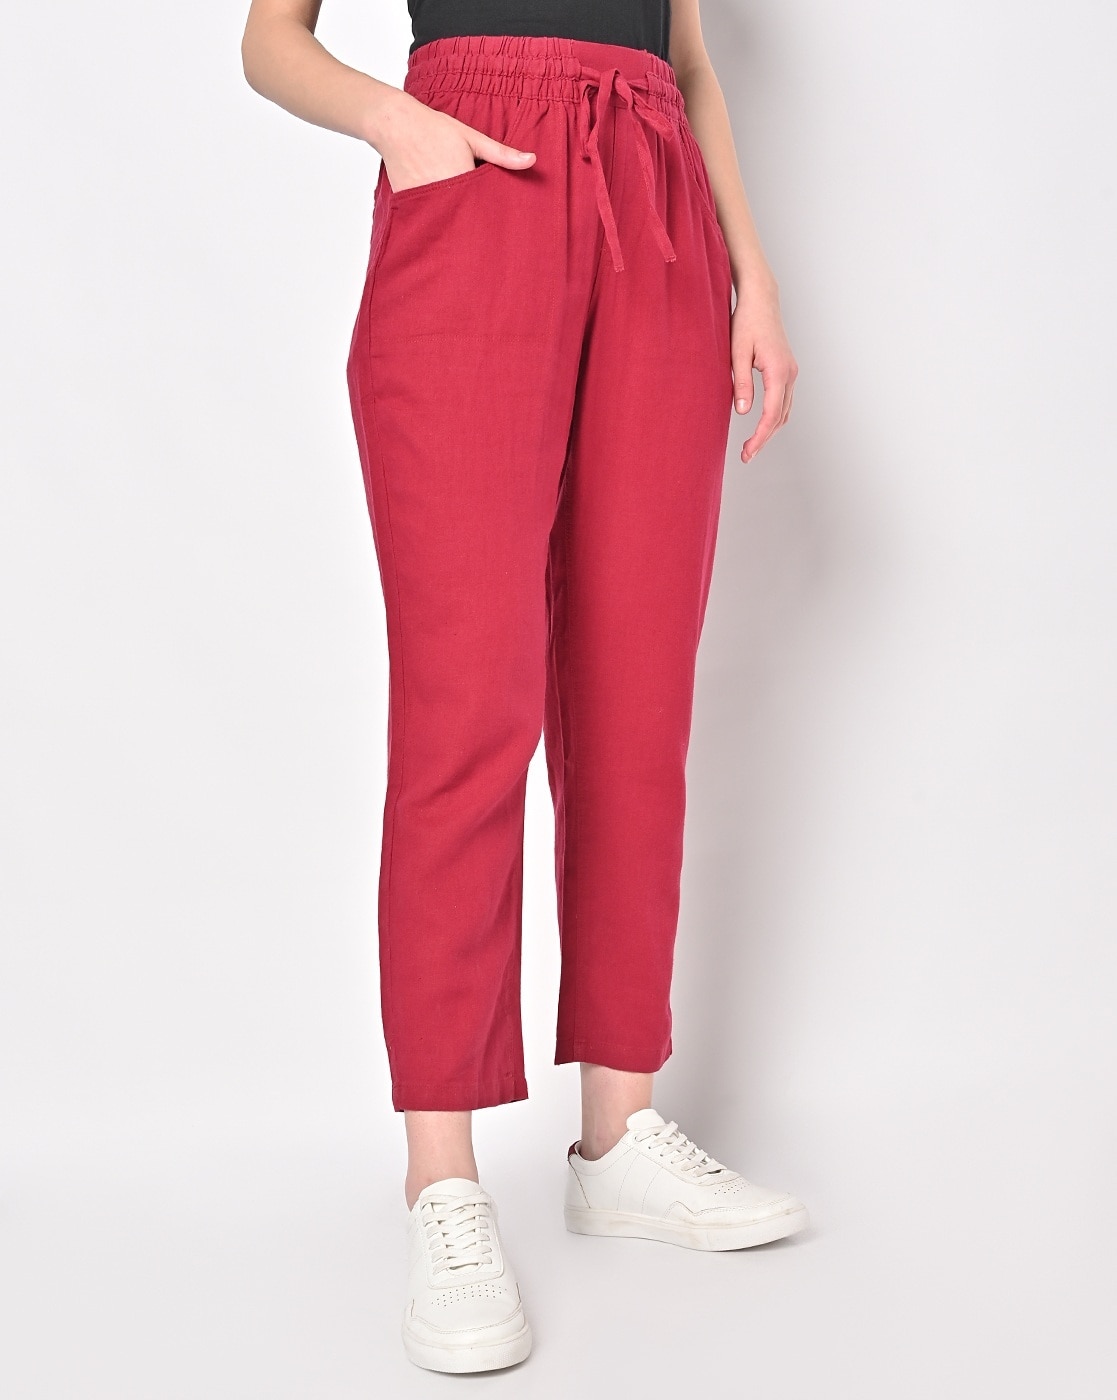 Red pants for women - Tummy tucker straight leg - 2 back pockets - Belore  Slims